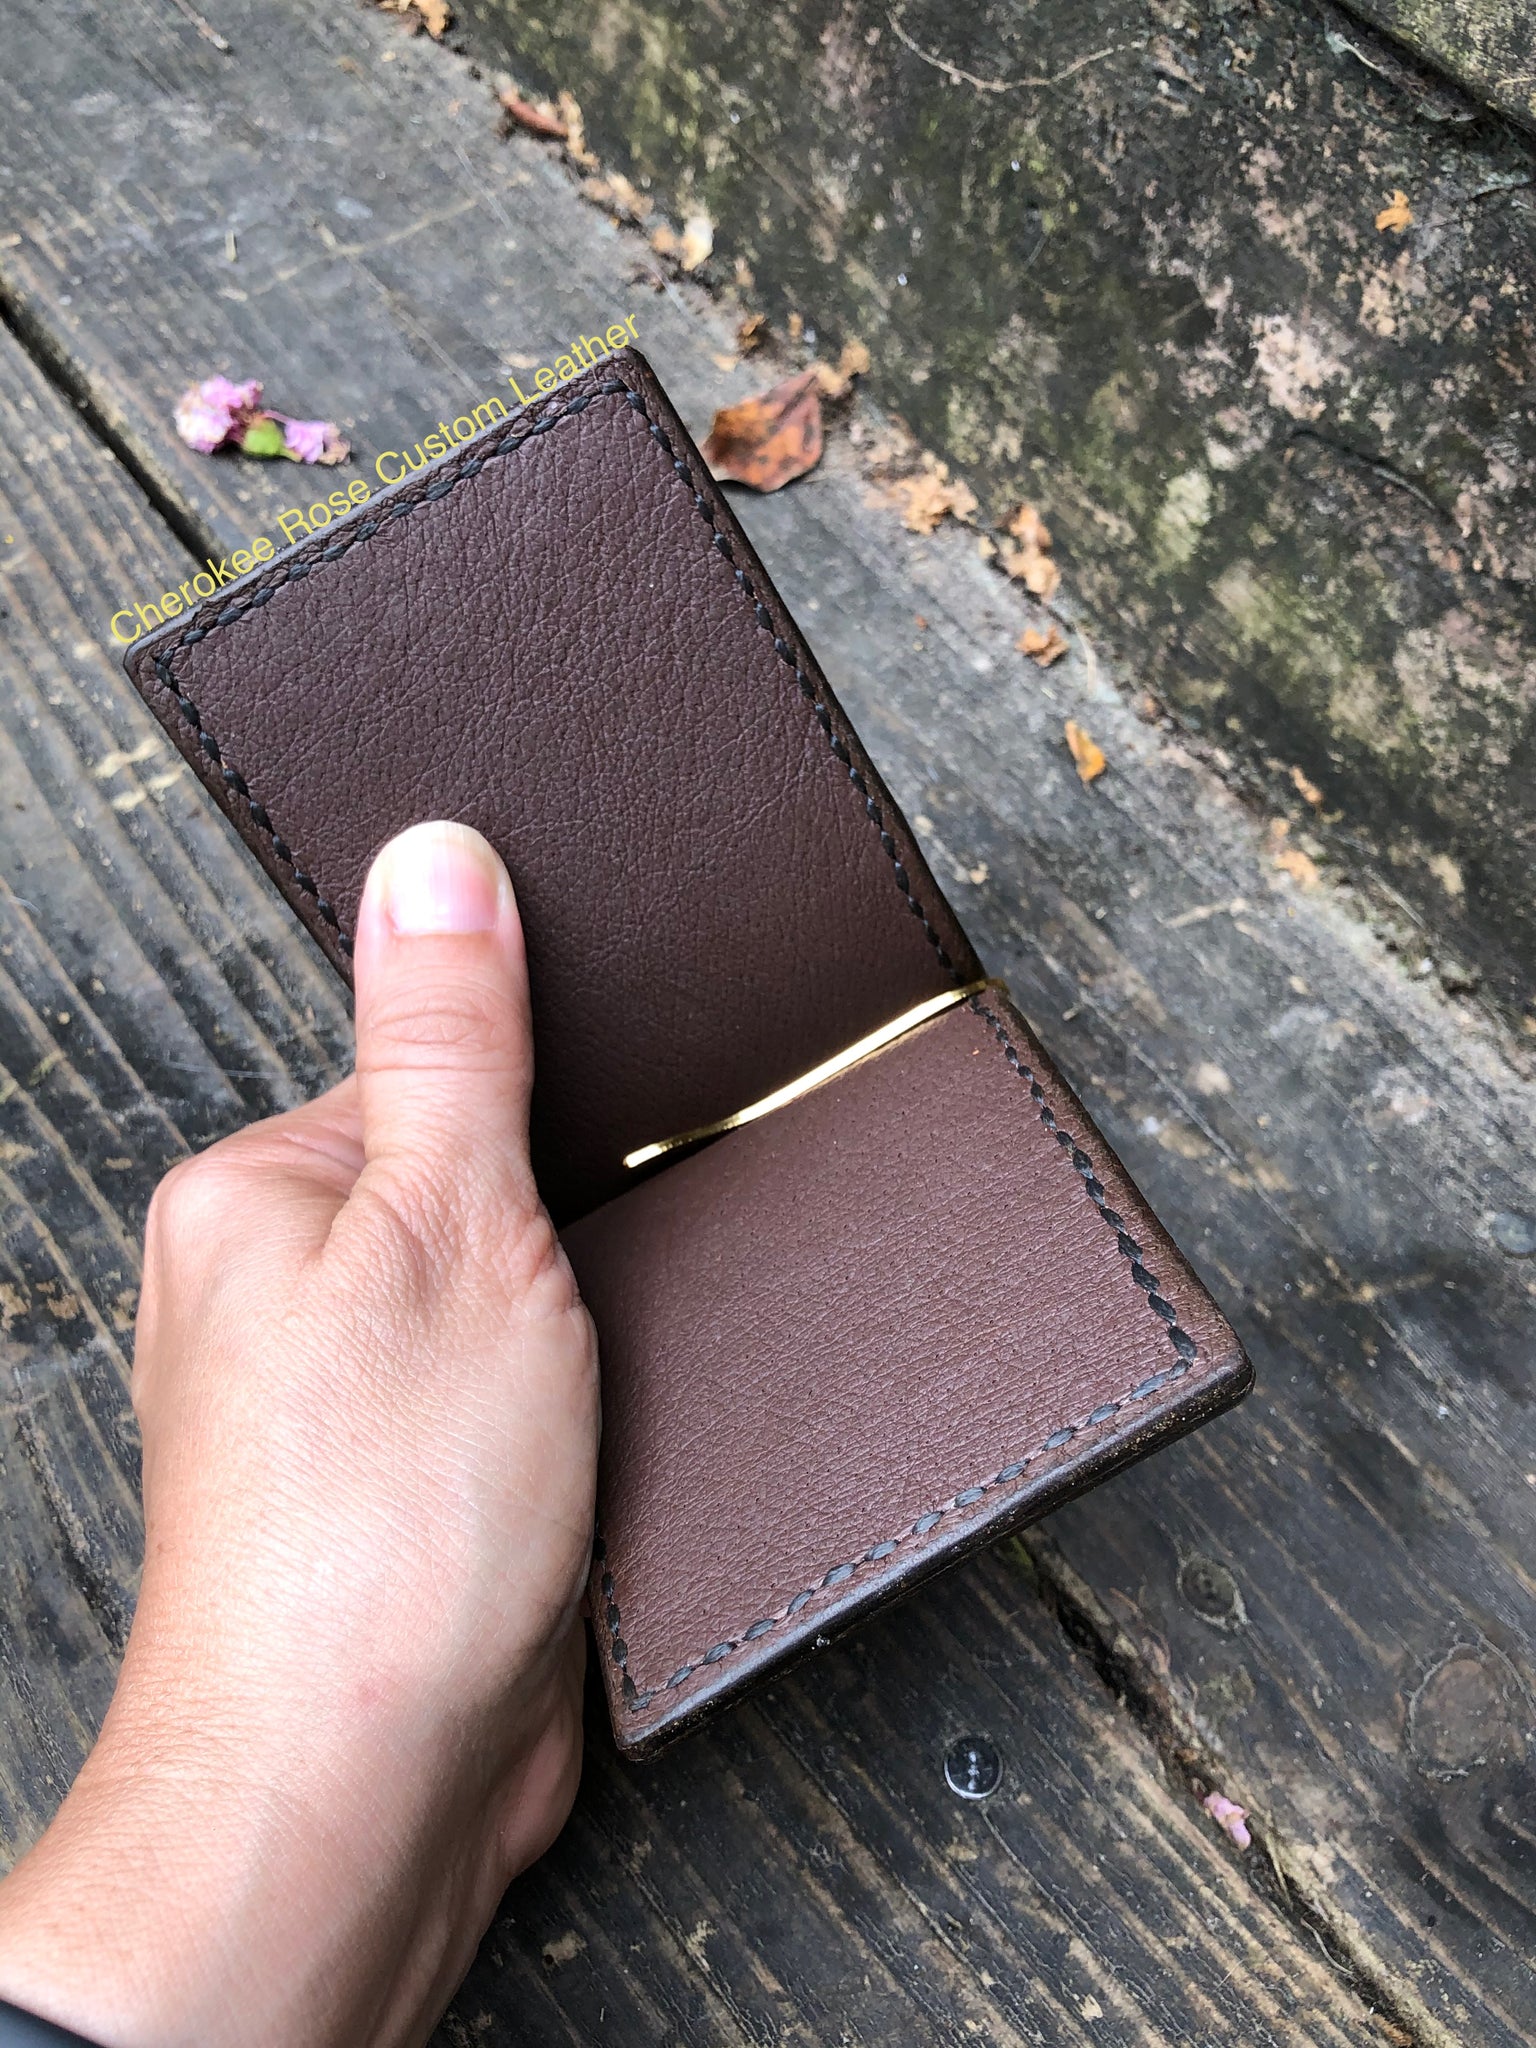 Sunflower Hand Carved Leather Wallet Custom Handmade 